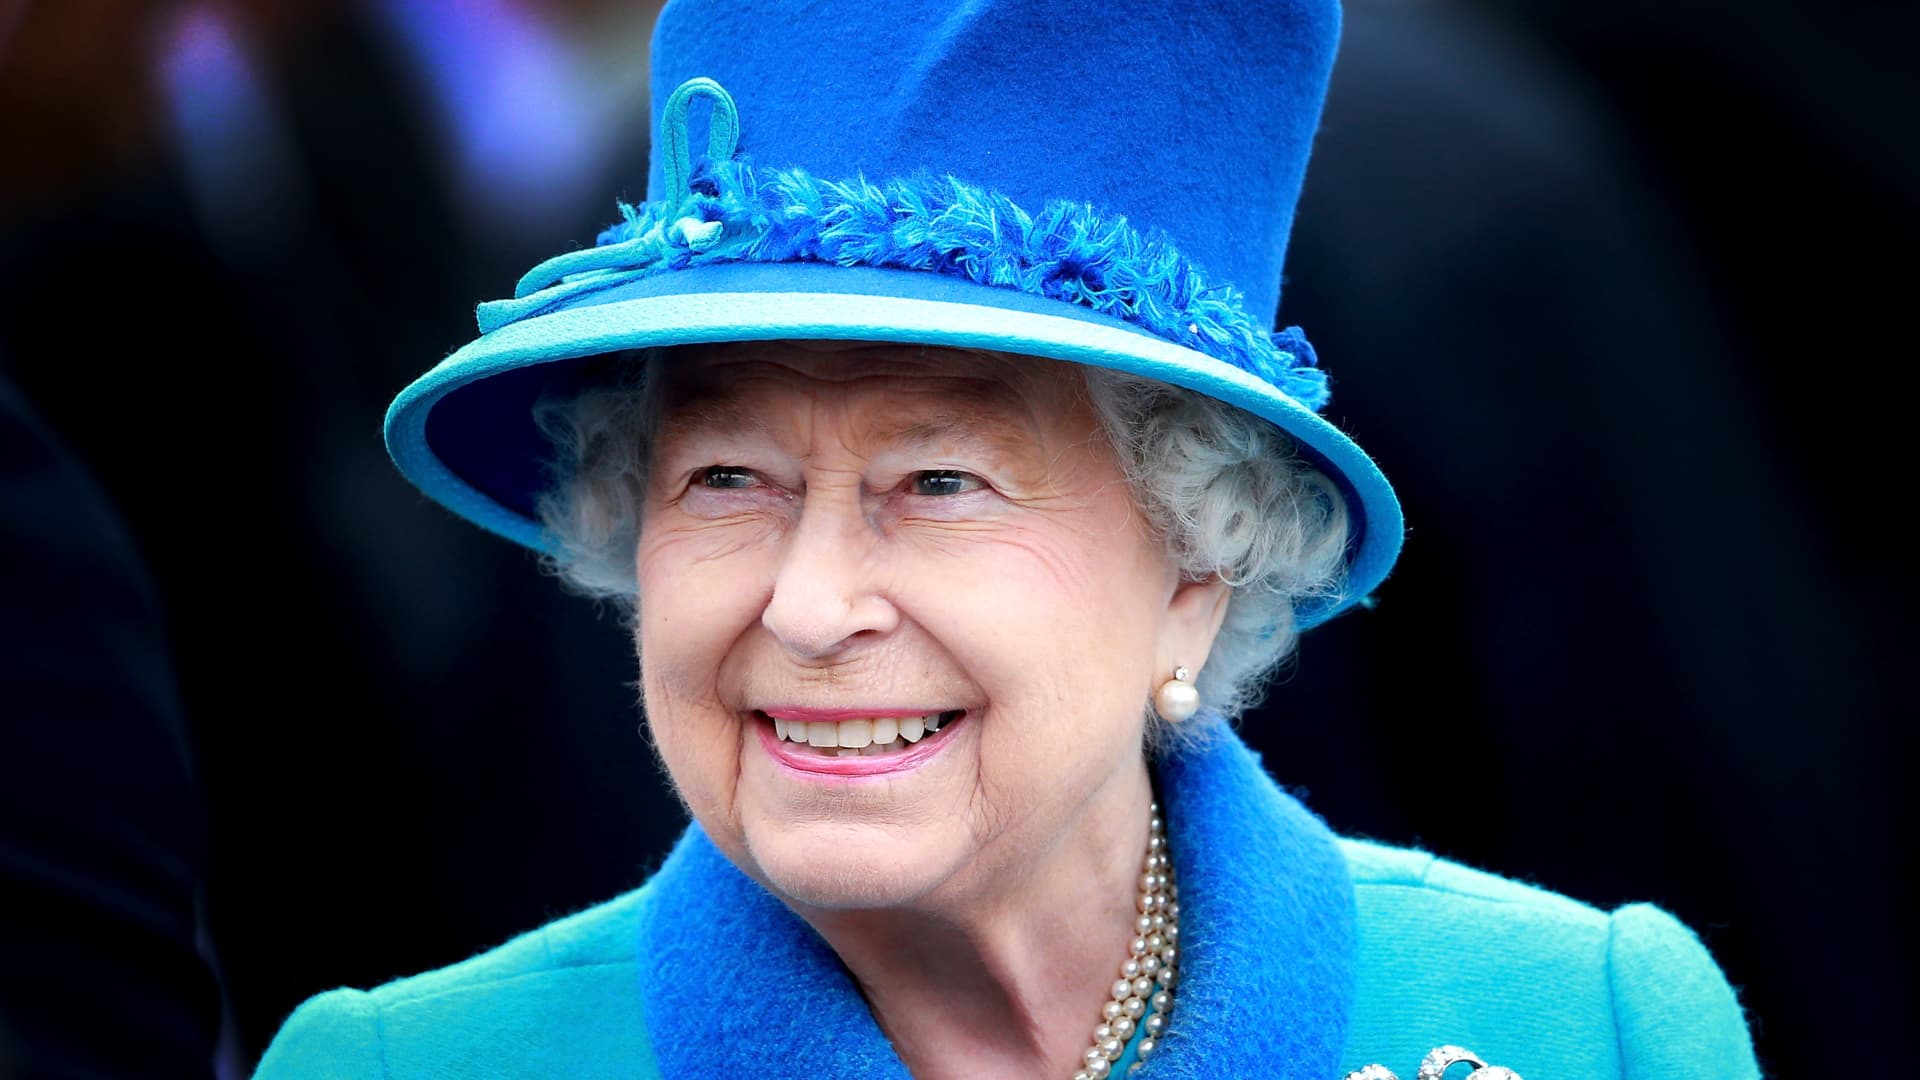 Queen Elizabeth II, then age 89, smiles as she arrives at Tweedbank Station in Scotland, Sept. 9, 2015.